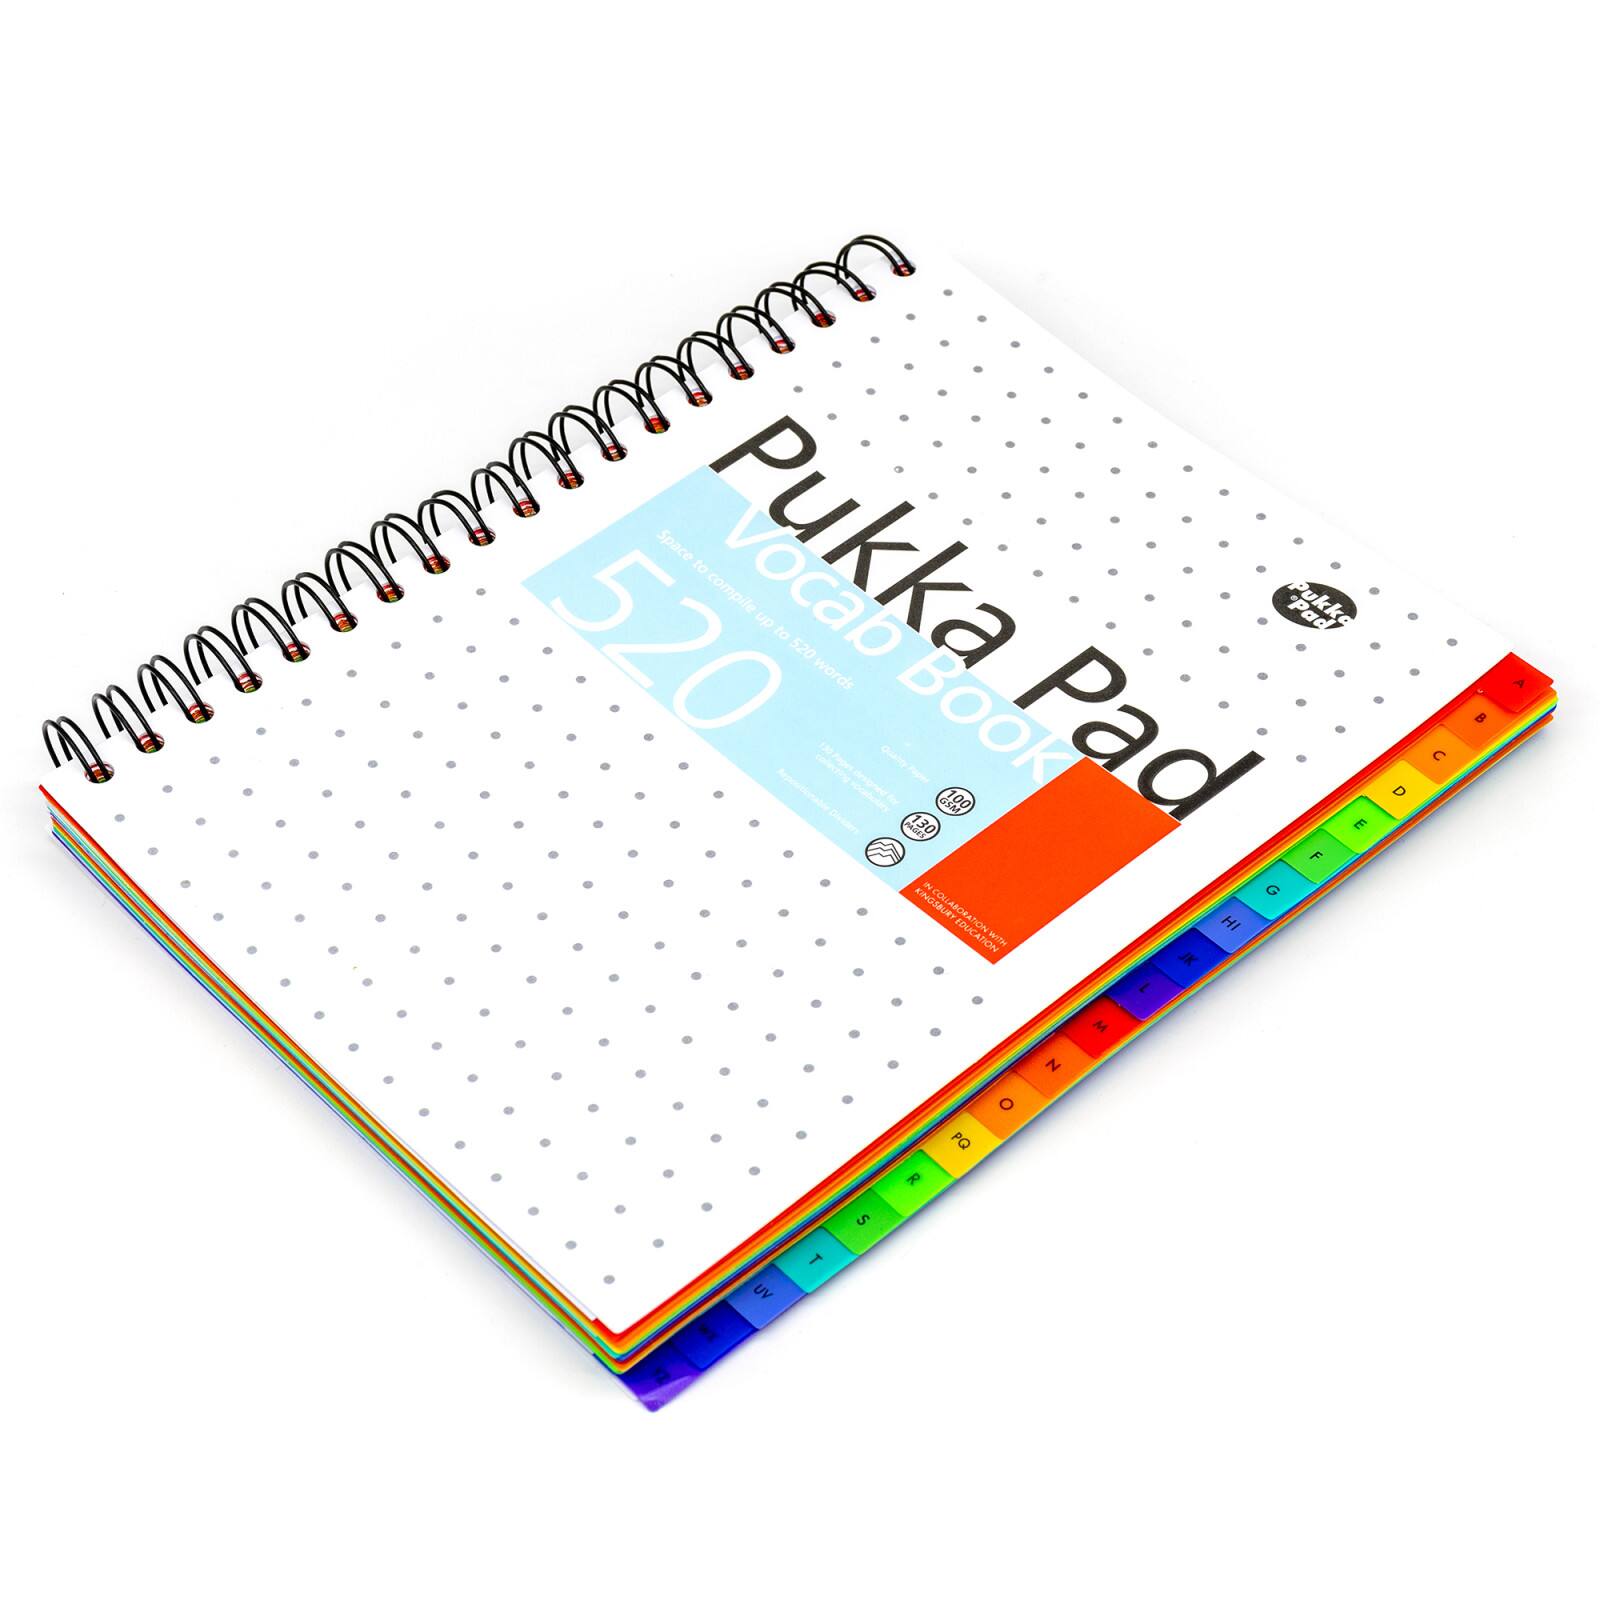 Pukka Pads Basics B5 Vocab Book